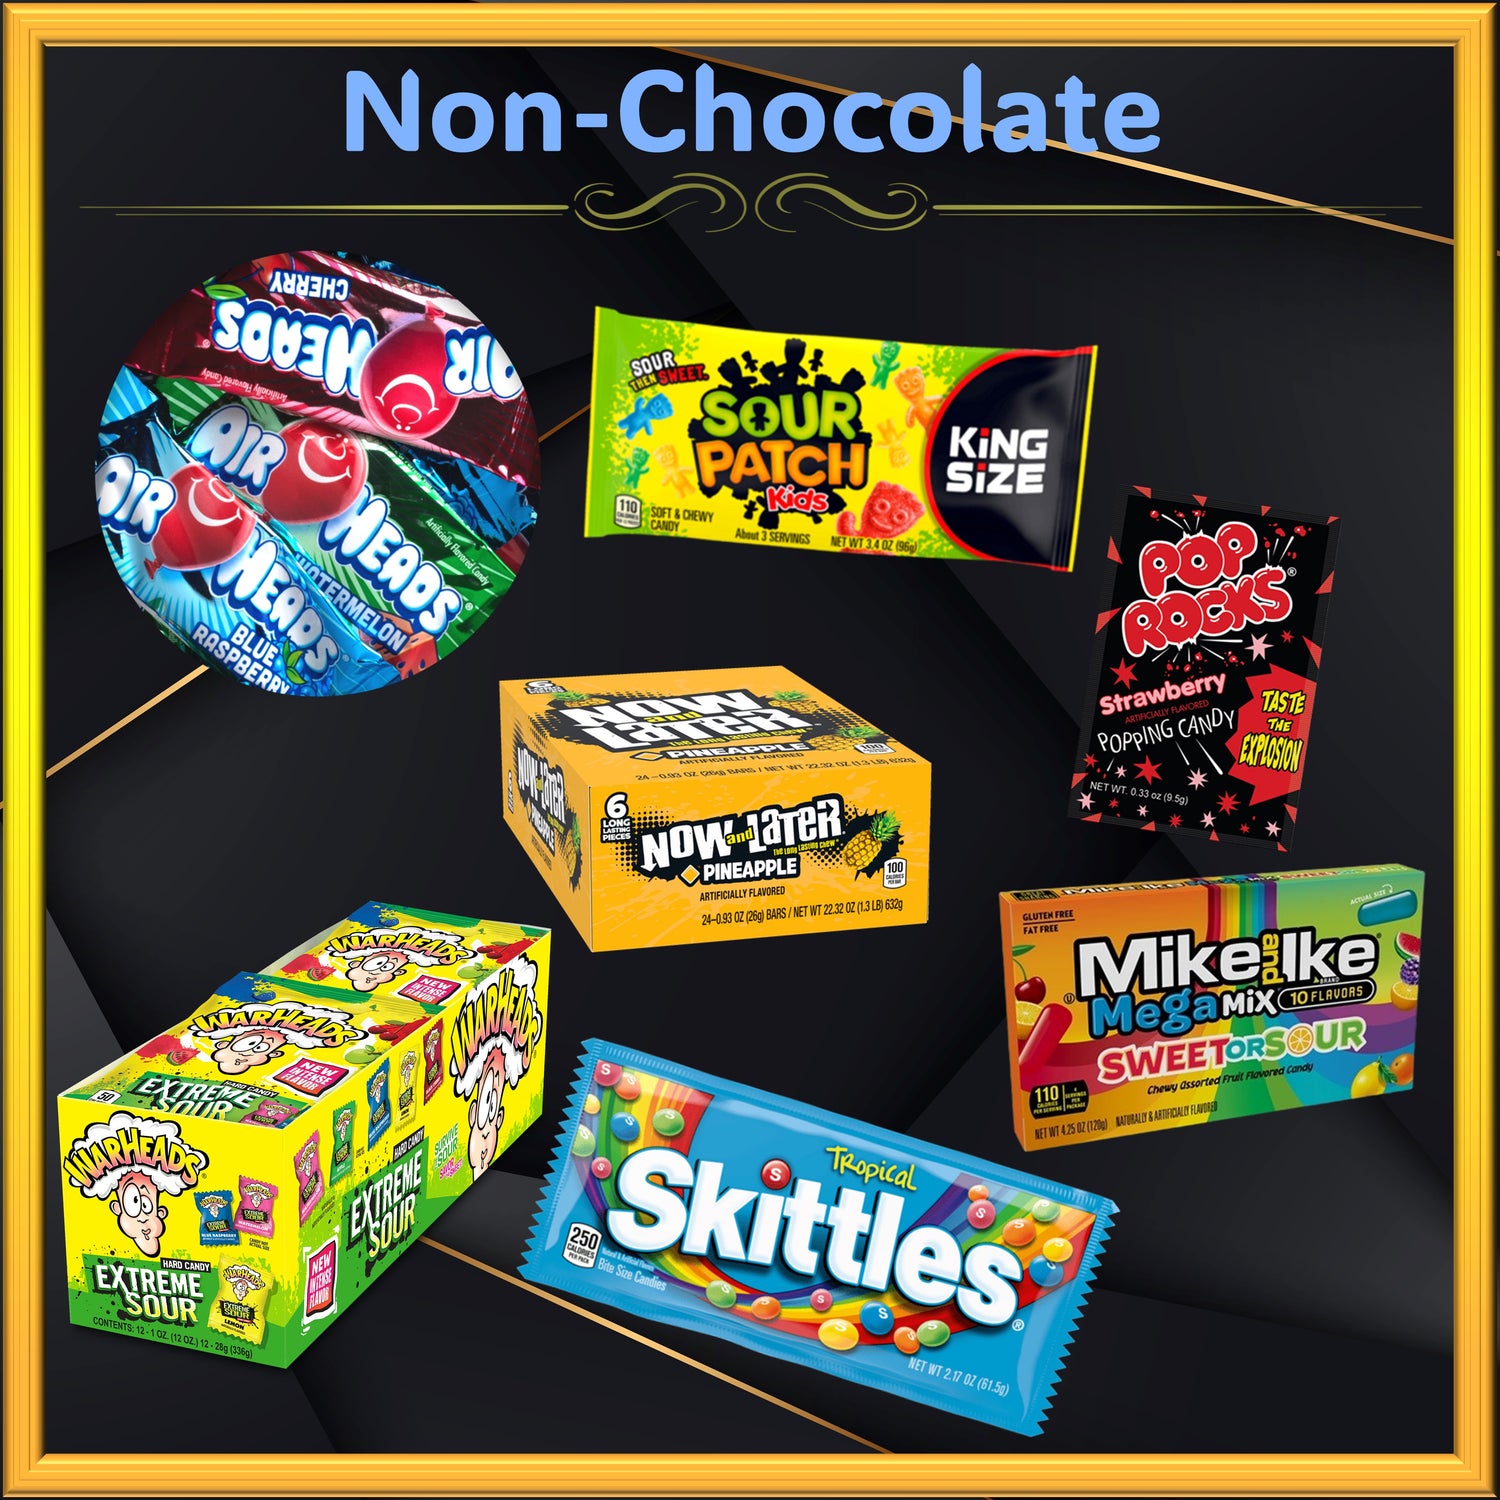 Non-Chocolate